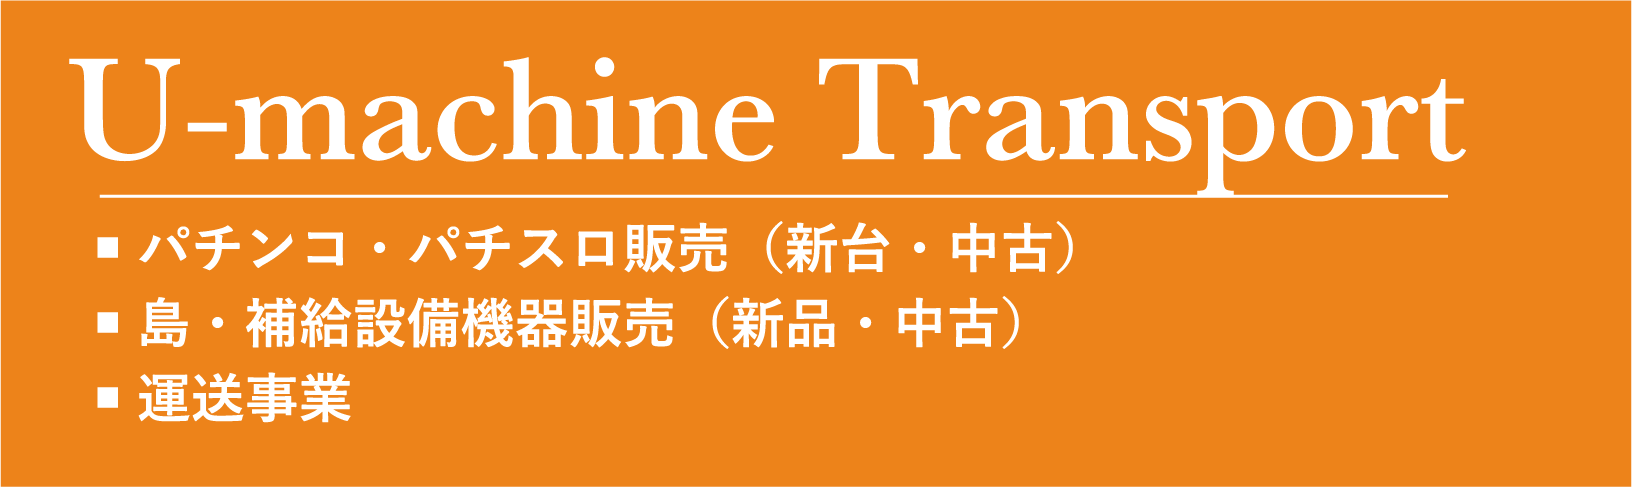 U-machine Transport ■パチンコ・パチスロ販売（新台・中古） ■  島・補給設備機器販売（新品・中古） ■  運送事業